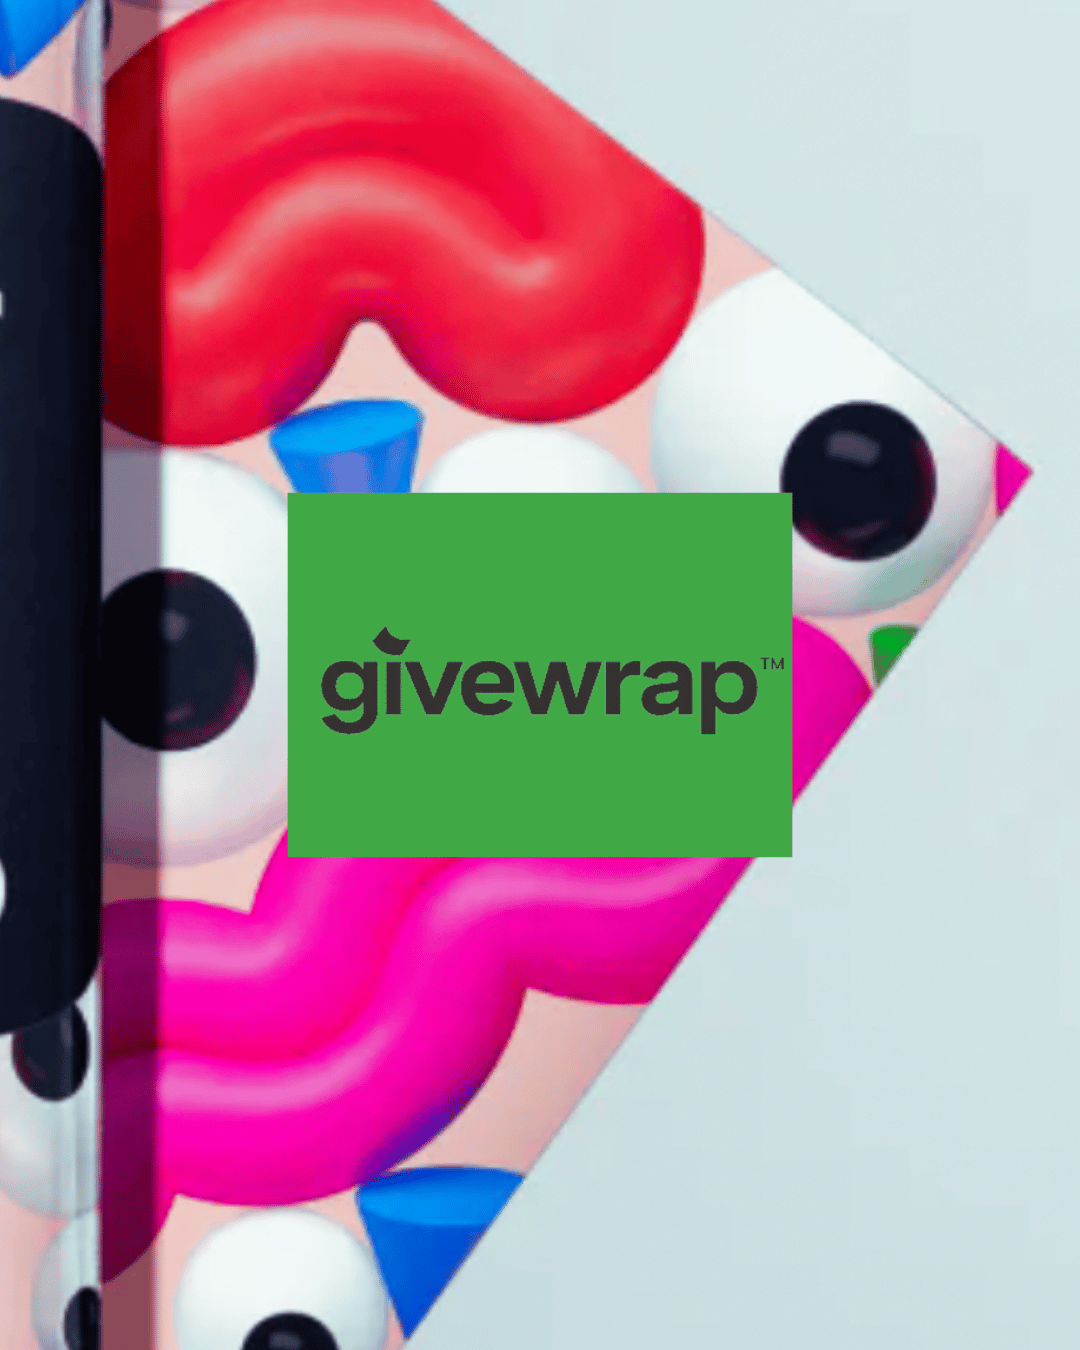 Givewrap